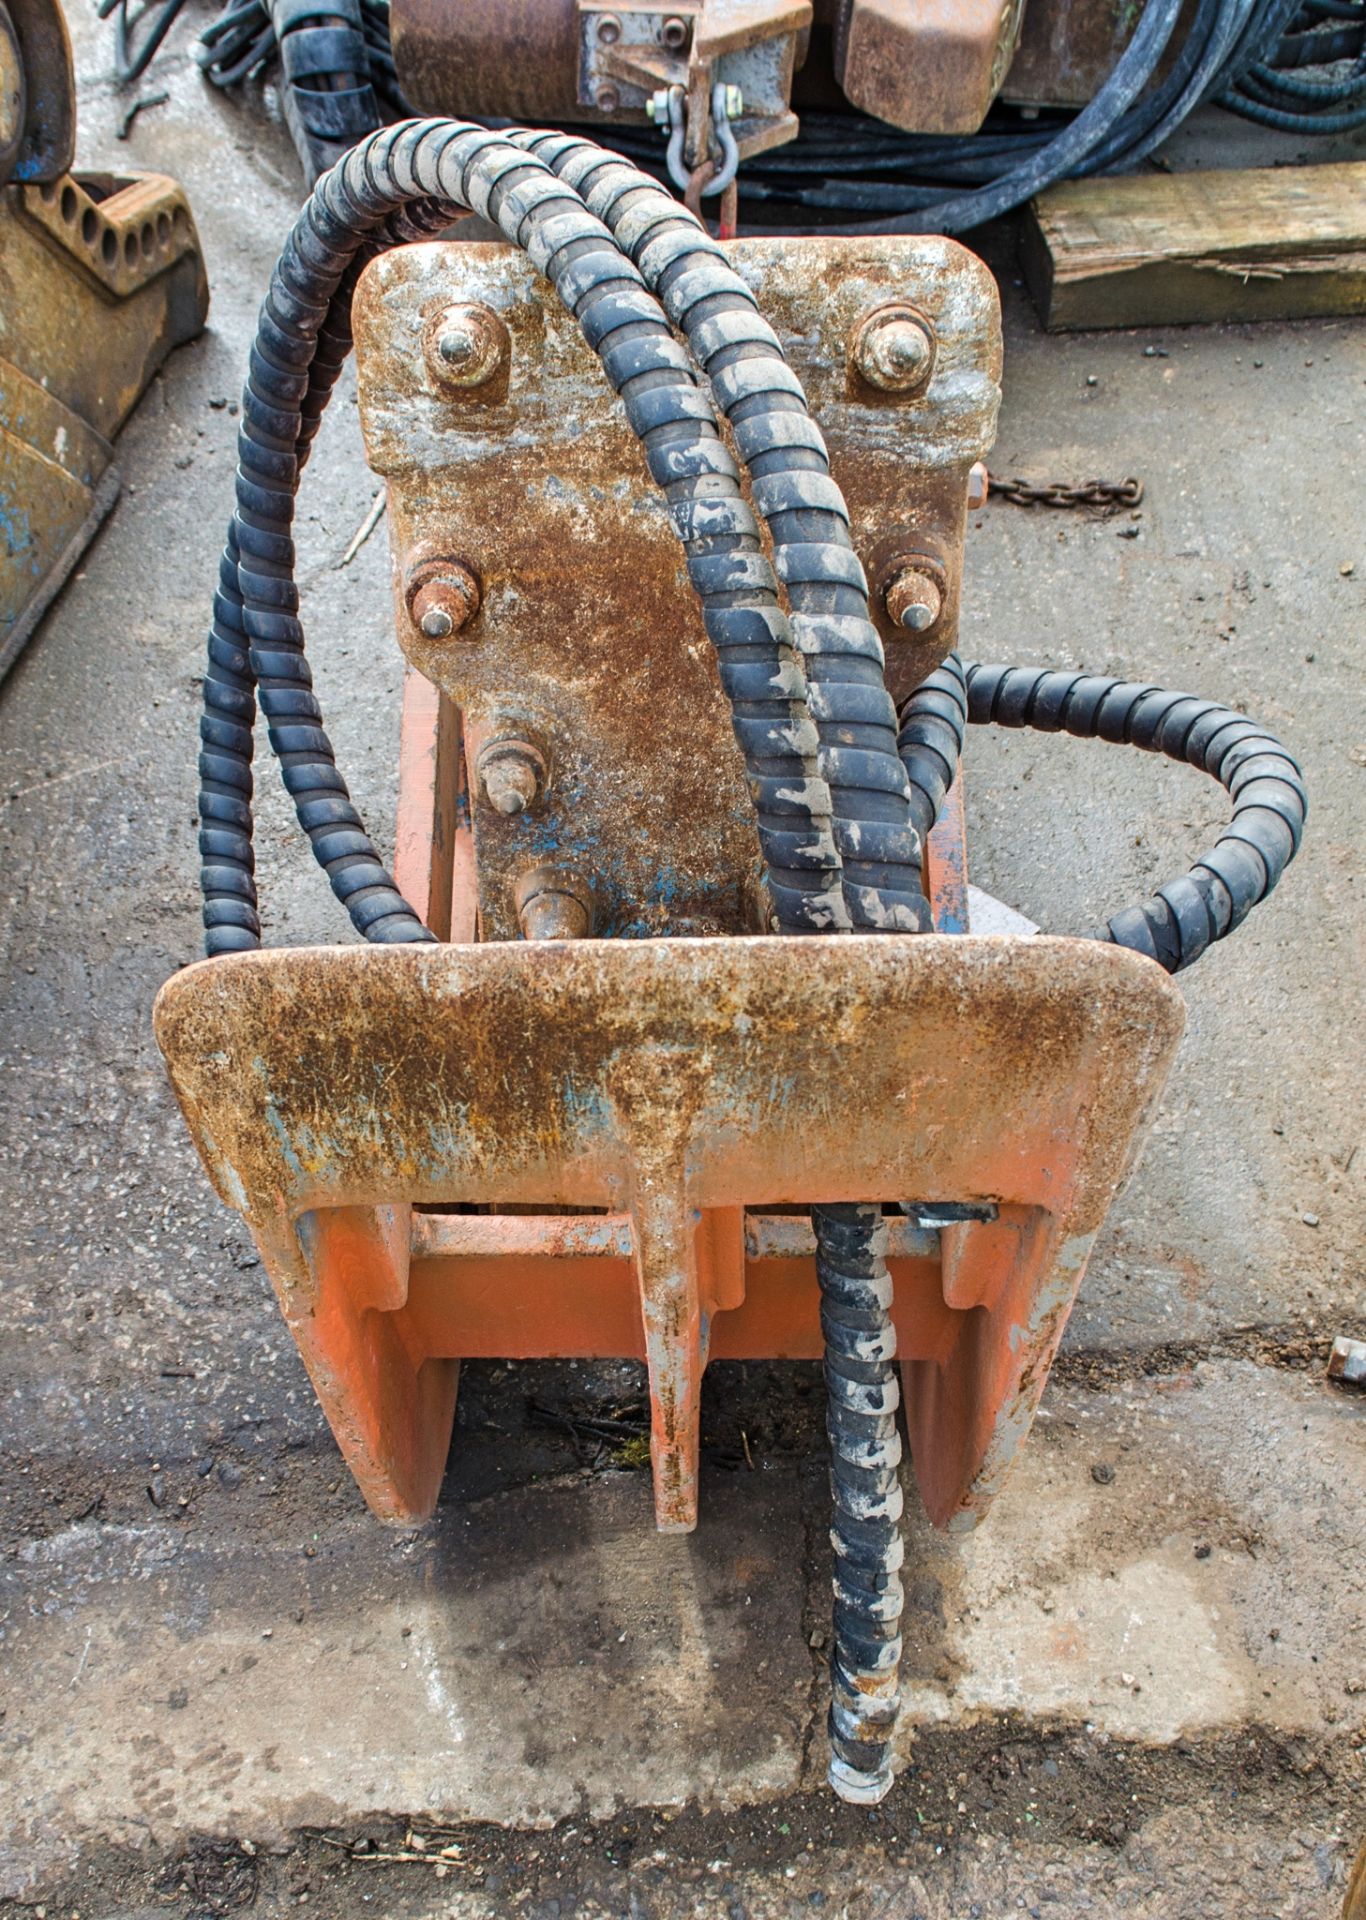 Hydraulic fixed pulveriser demolition shear for 3-9 tonne excavator SH1376 - Image 4 of 4